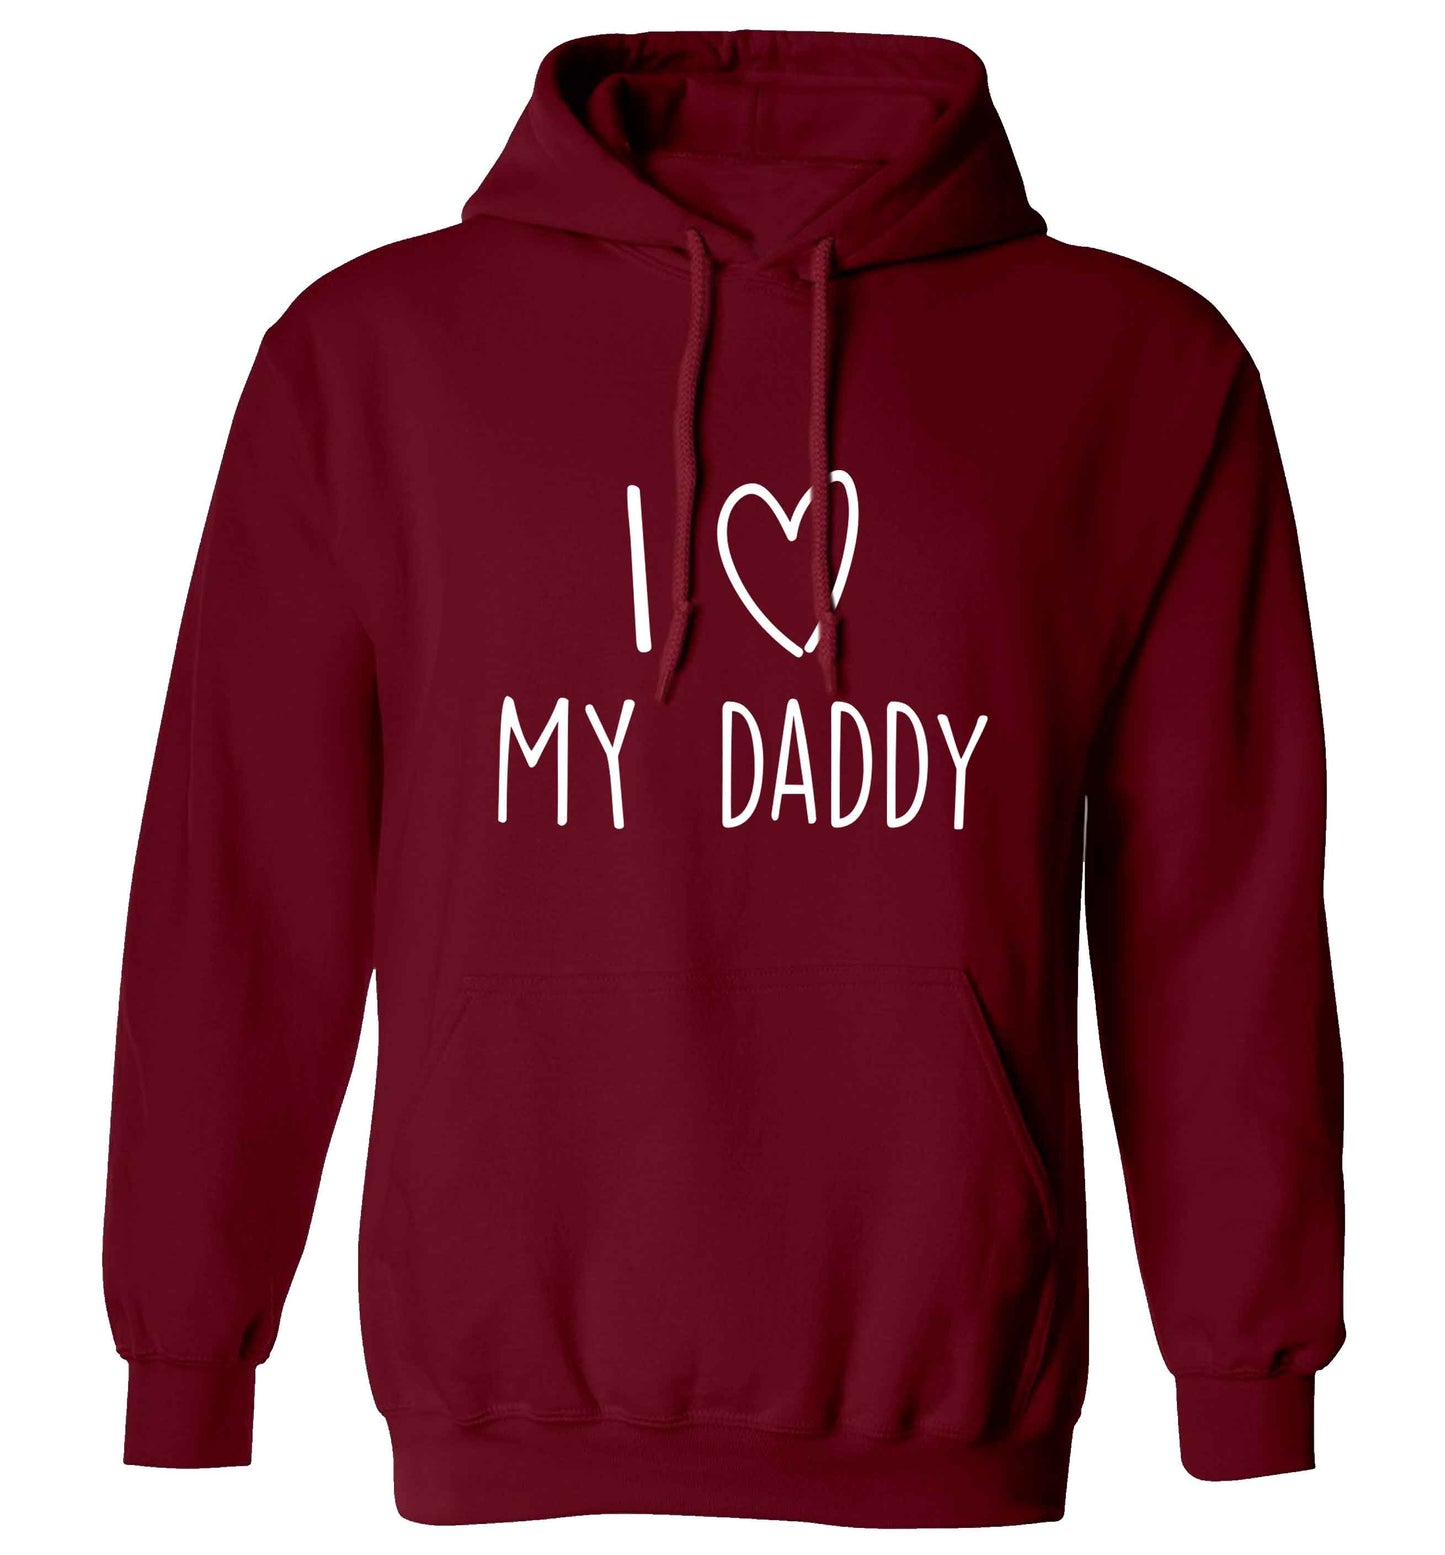 I love my daddy adults unisex maroon hoodie 2XL